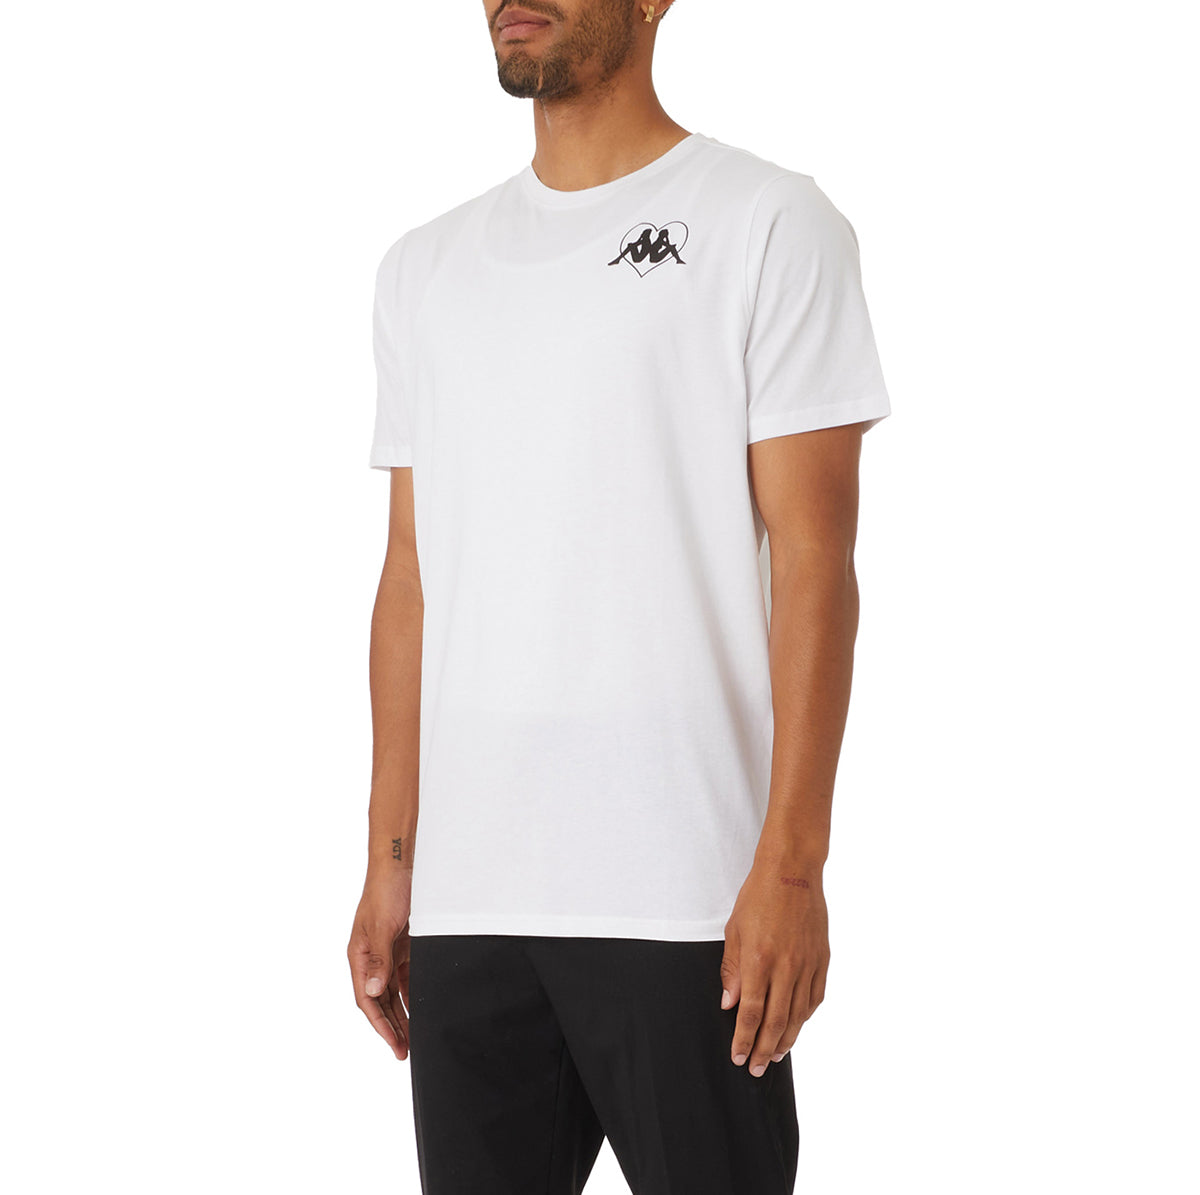 Camiseta Bytom blanco hombre - imagen 4